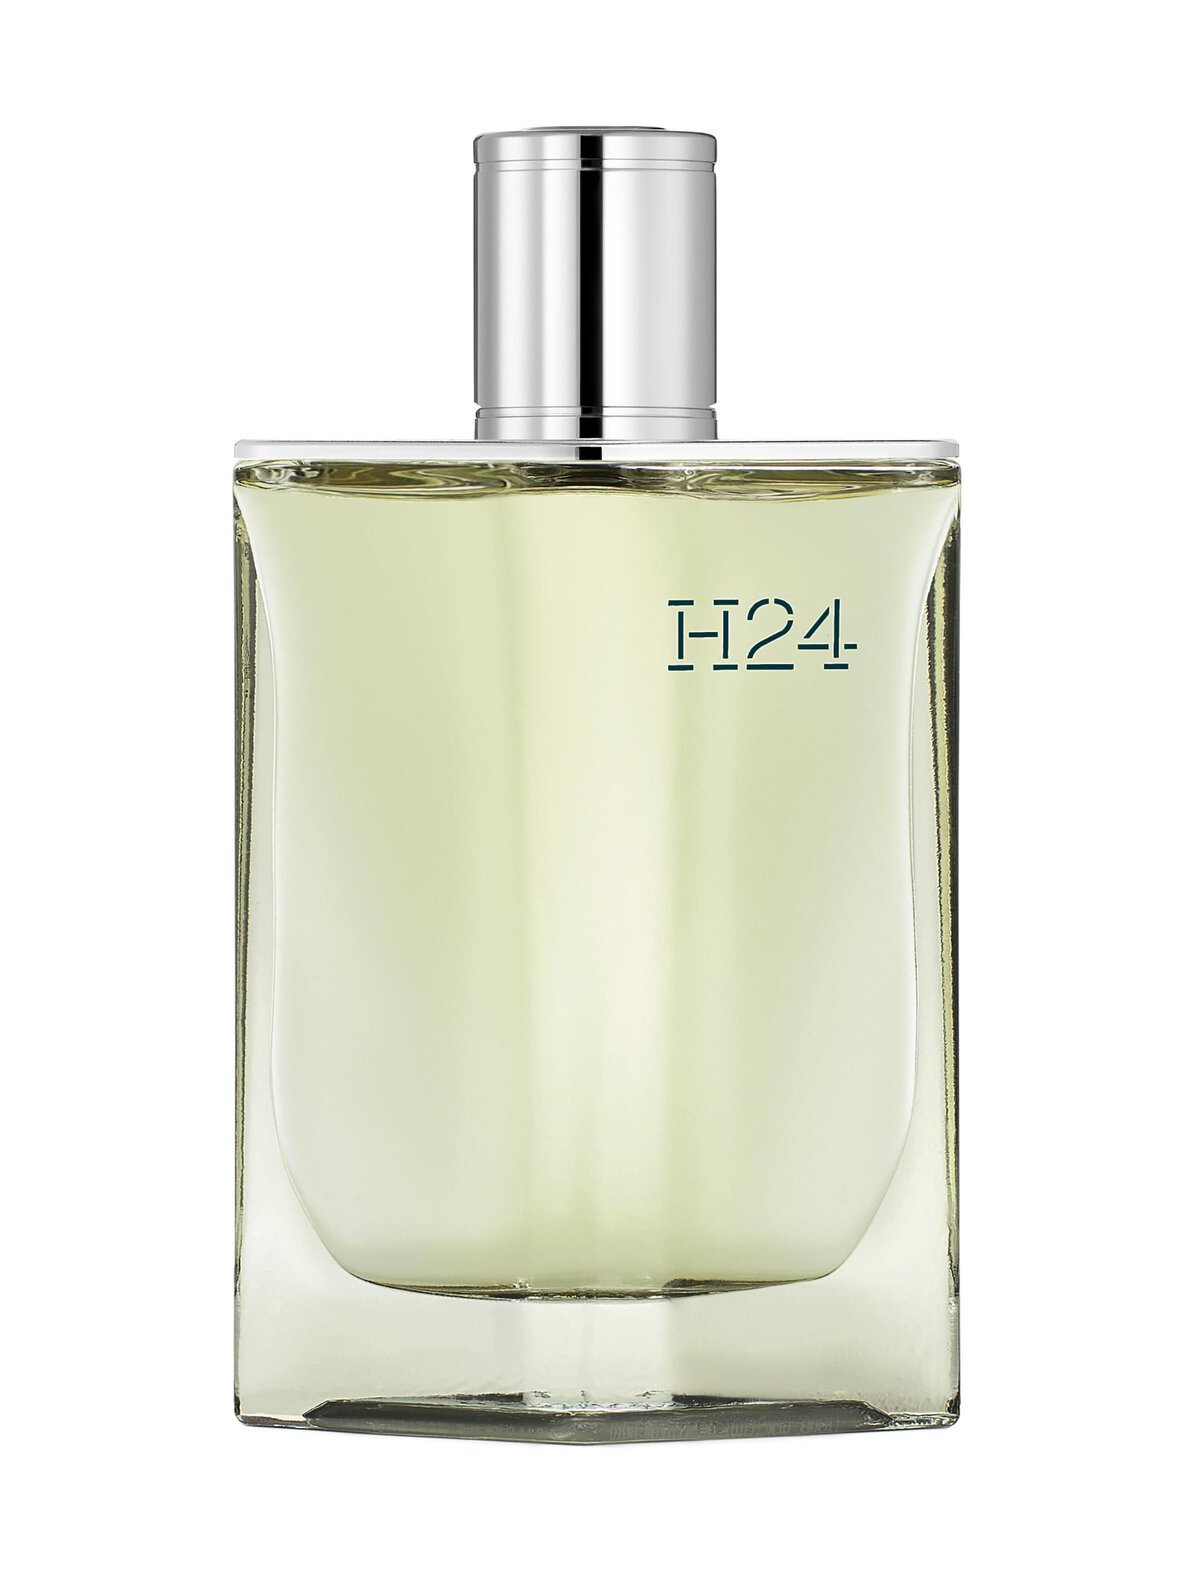 HERMÈS H24, eau de parfum -tuoksu